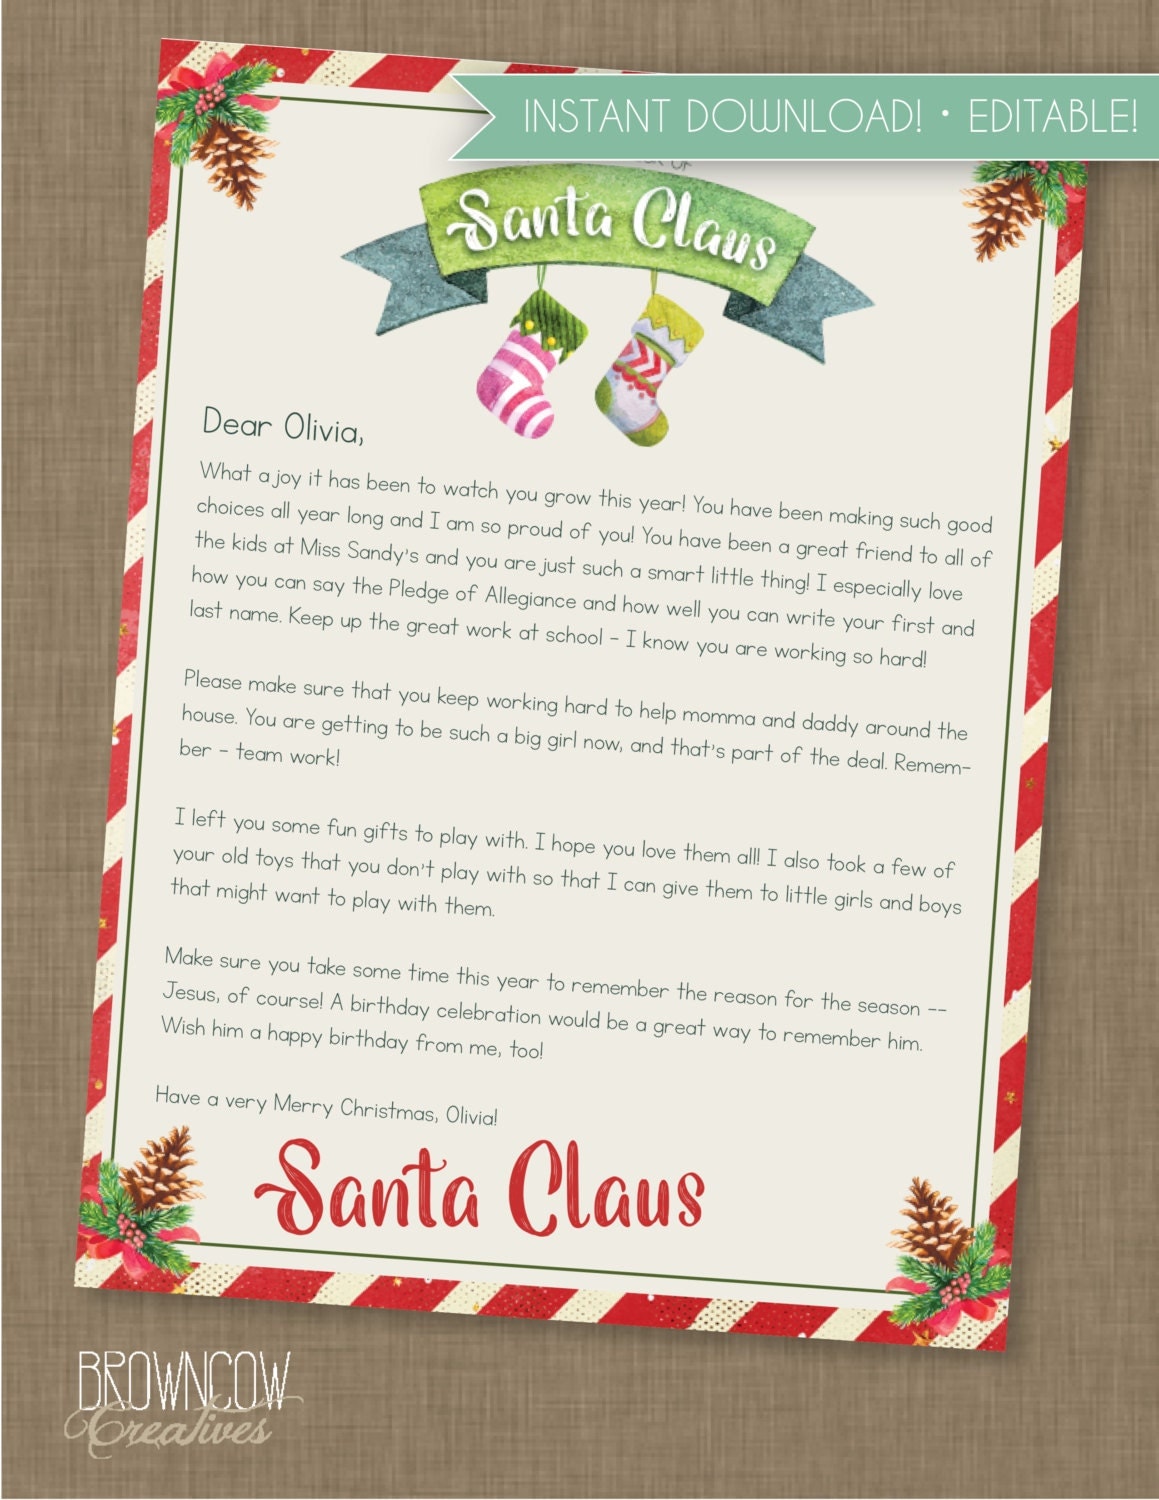 INSTANT DOWNLOAD EDITABLE Santa Letter // Letter from Santa